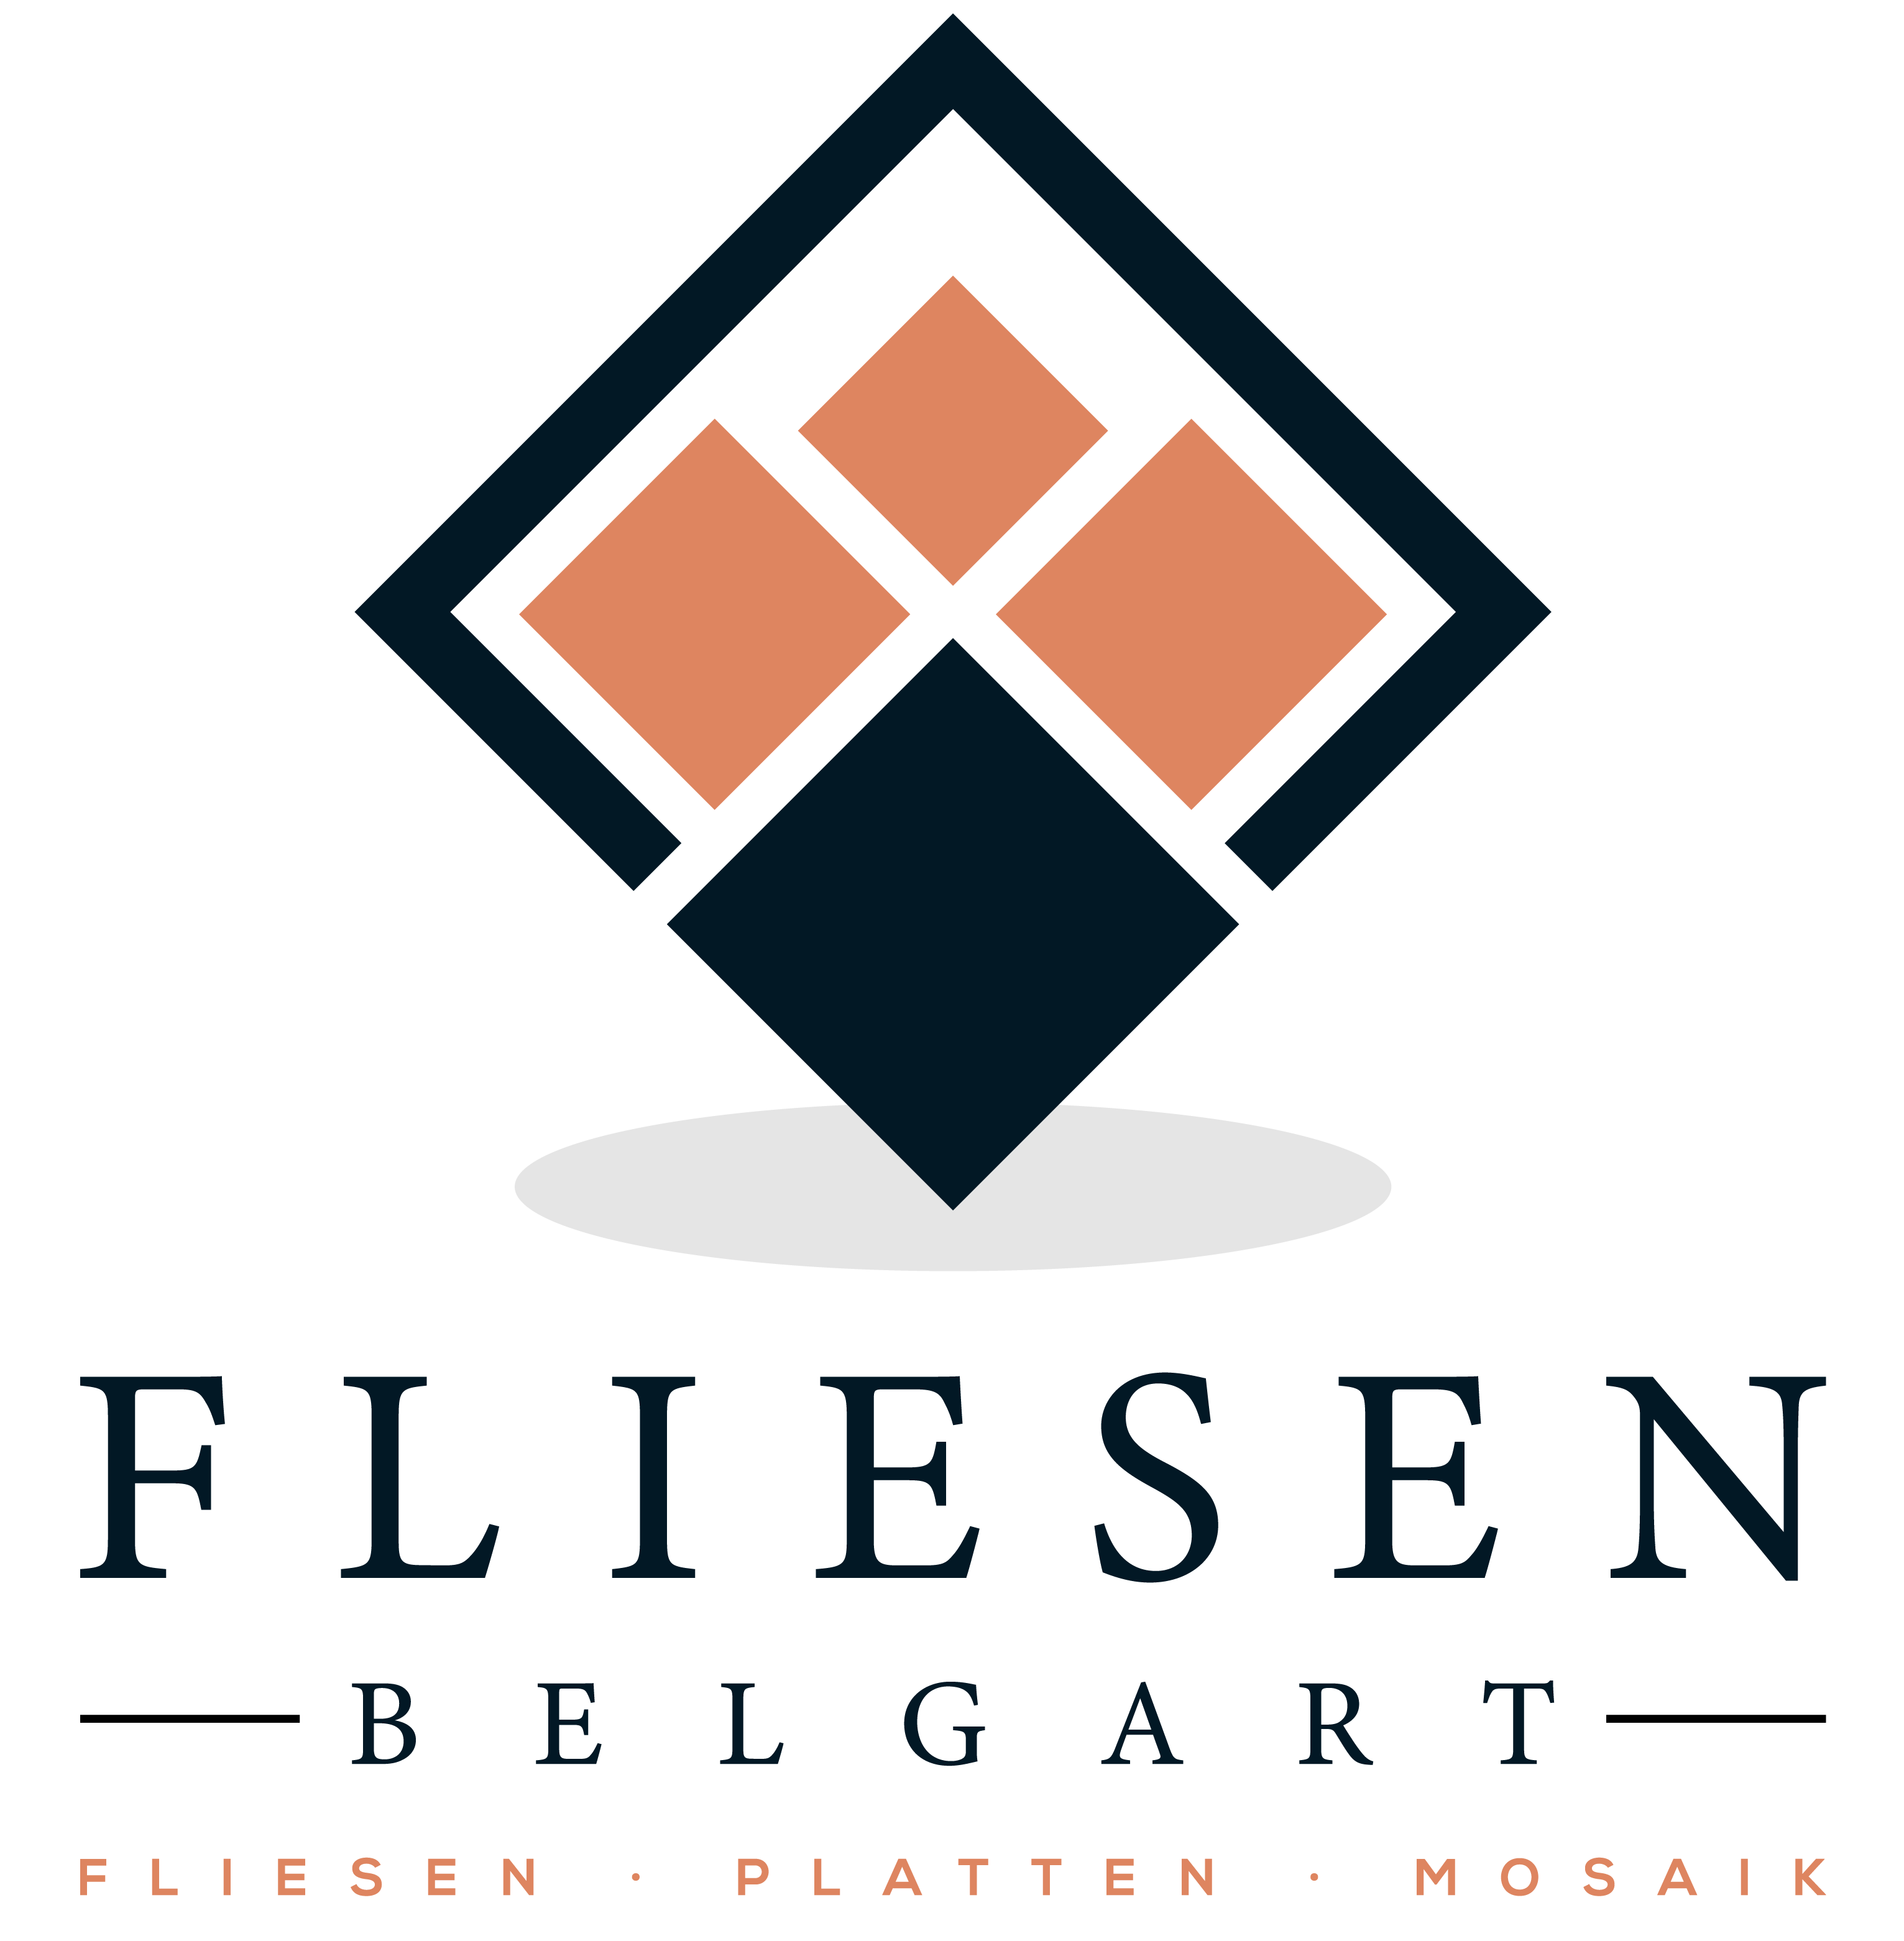 fliesen-belgart-logo-with-text